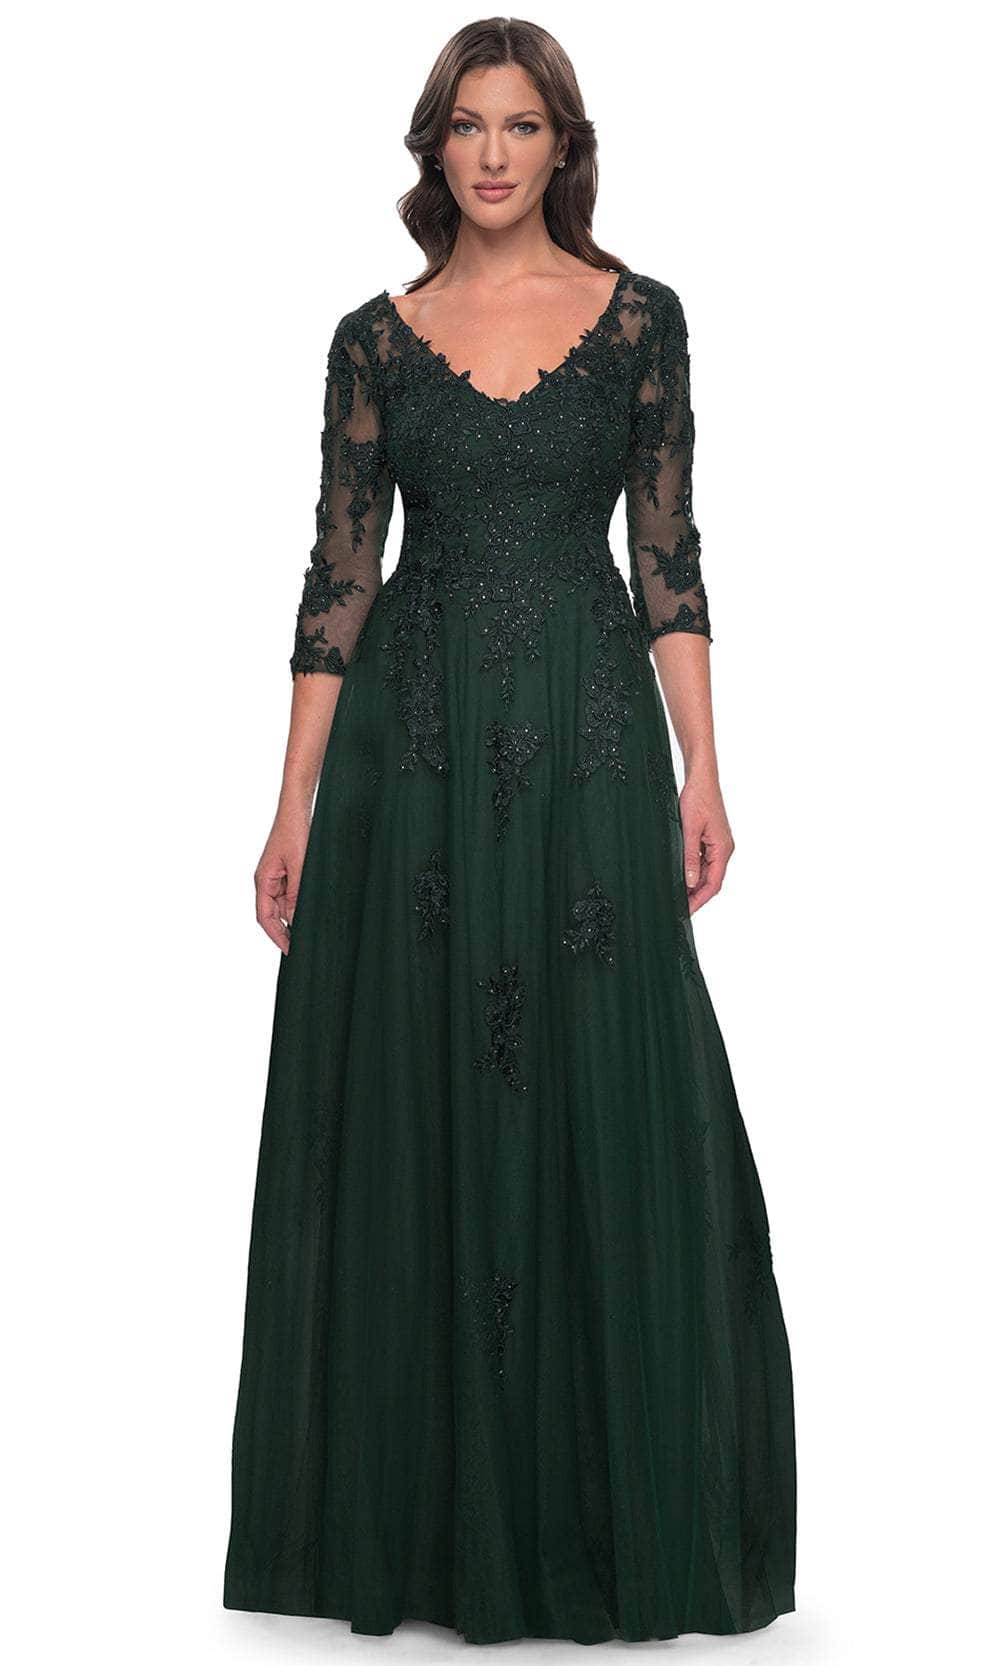 Image of La Femme 30398 - Lace Ornate A-Line Evening Dress